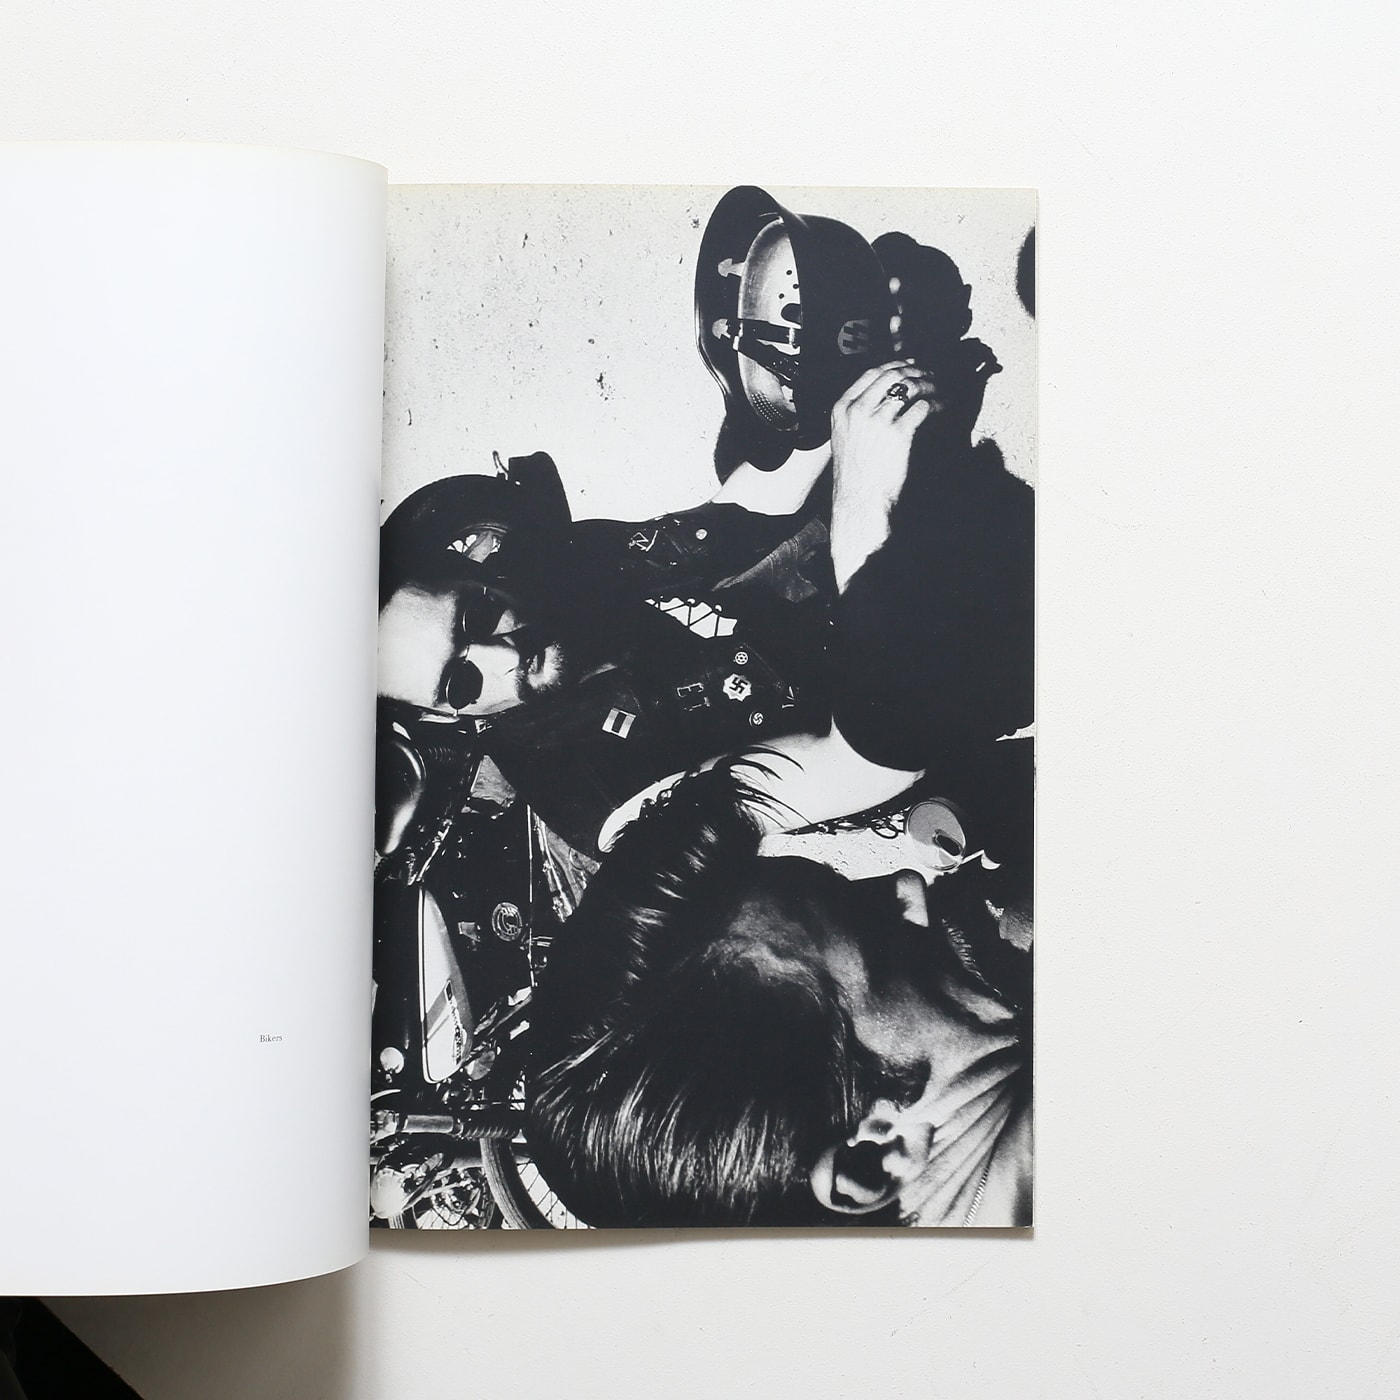 Dennis Hopper: Photographs from 1961-1967